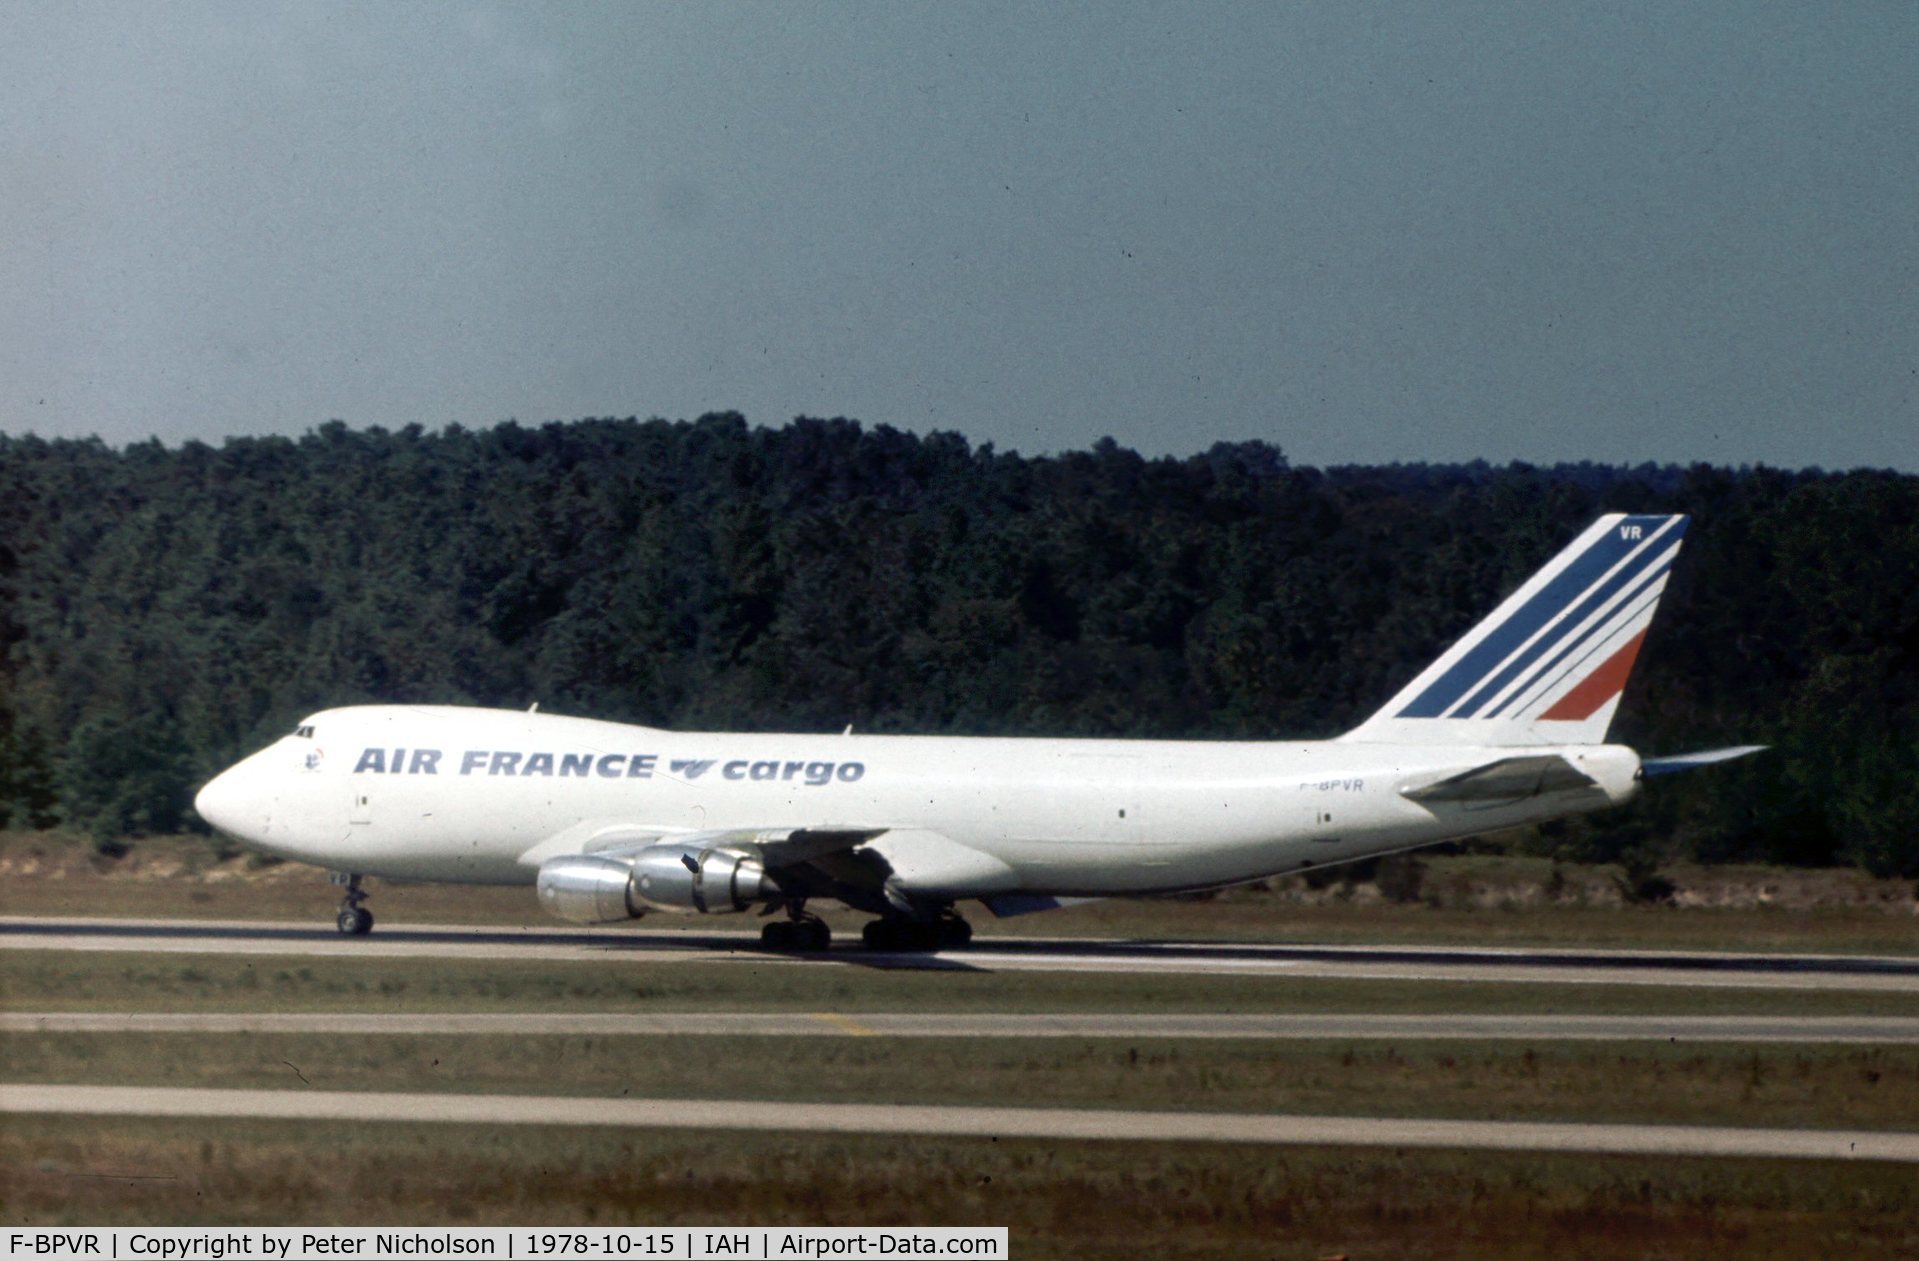 F-BPVR, 1976 Boeing 747-228F C/N 21255, Air France Cargo flight departing Houston International in October 1978.